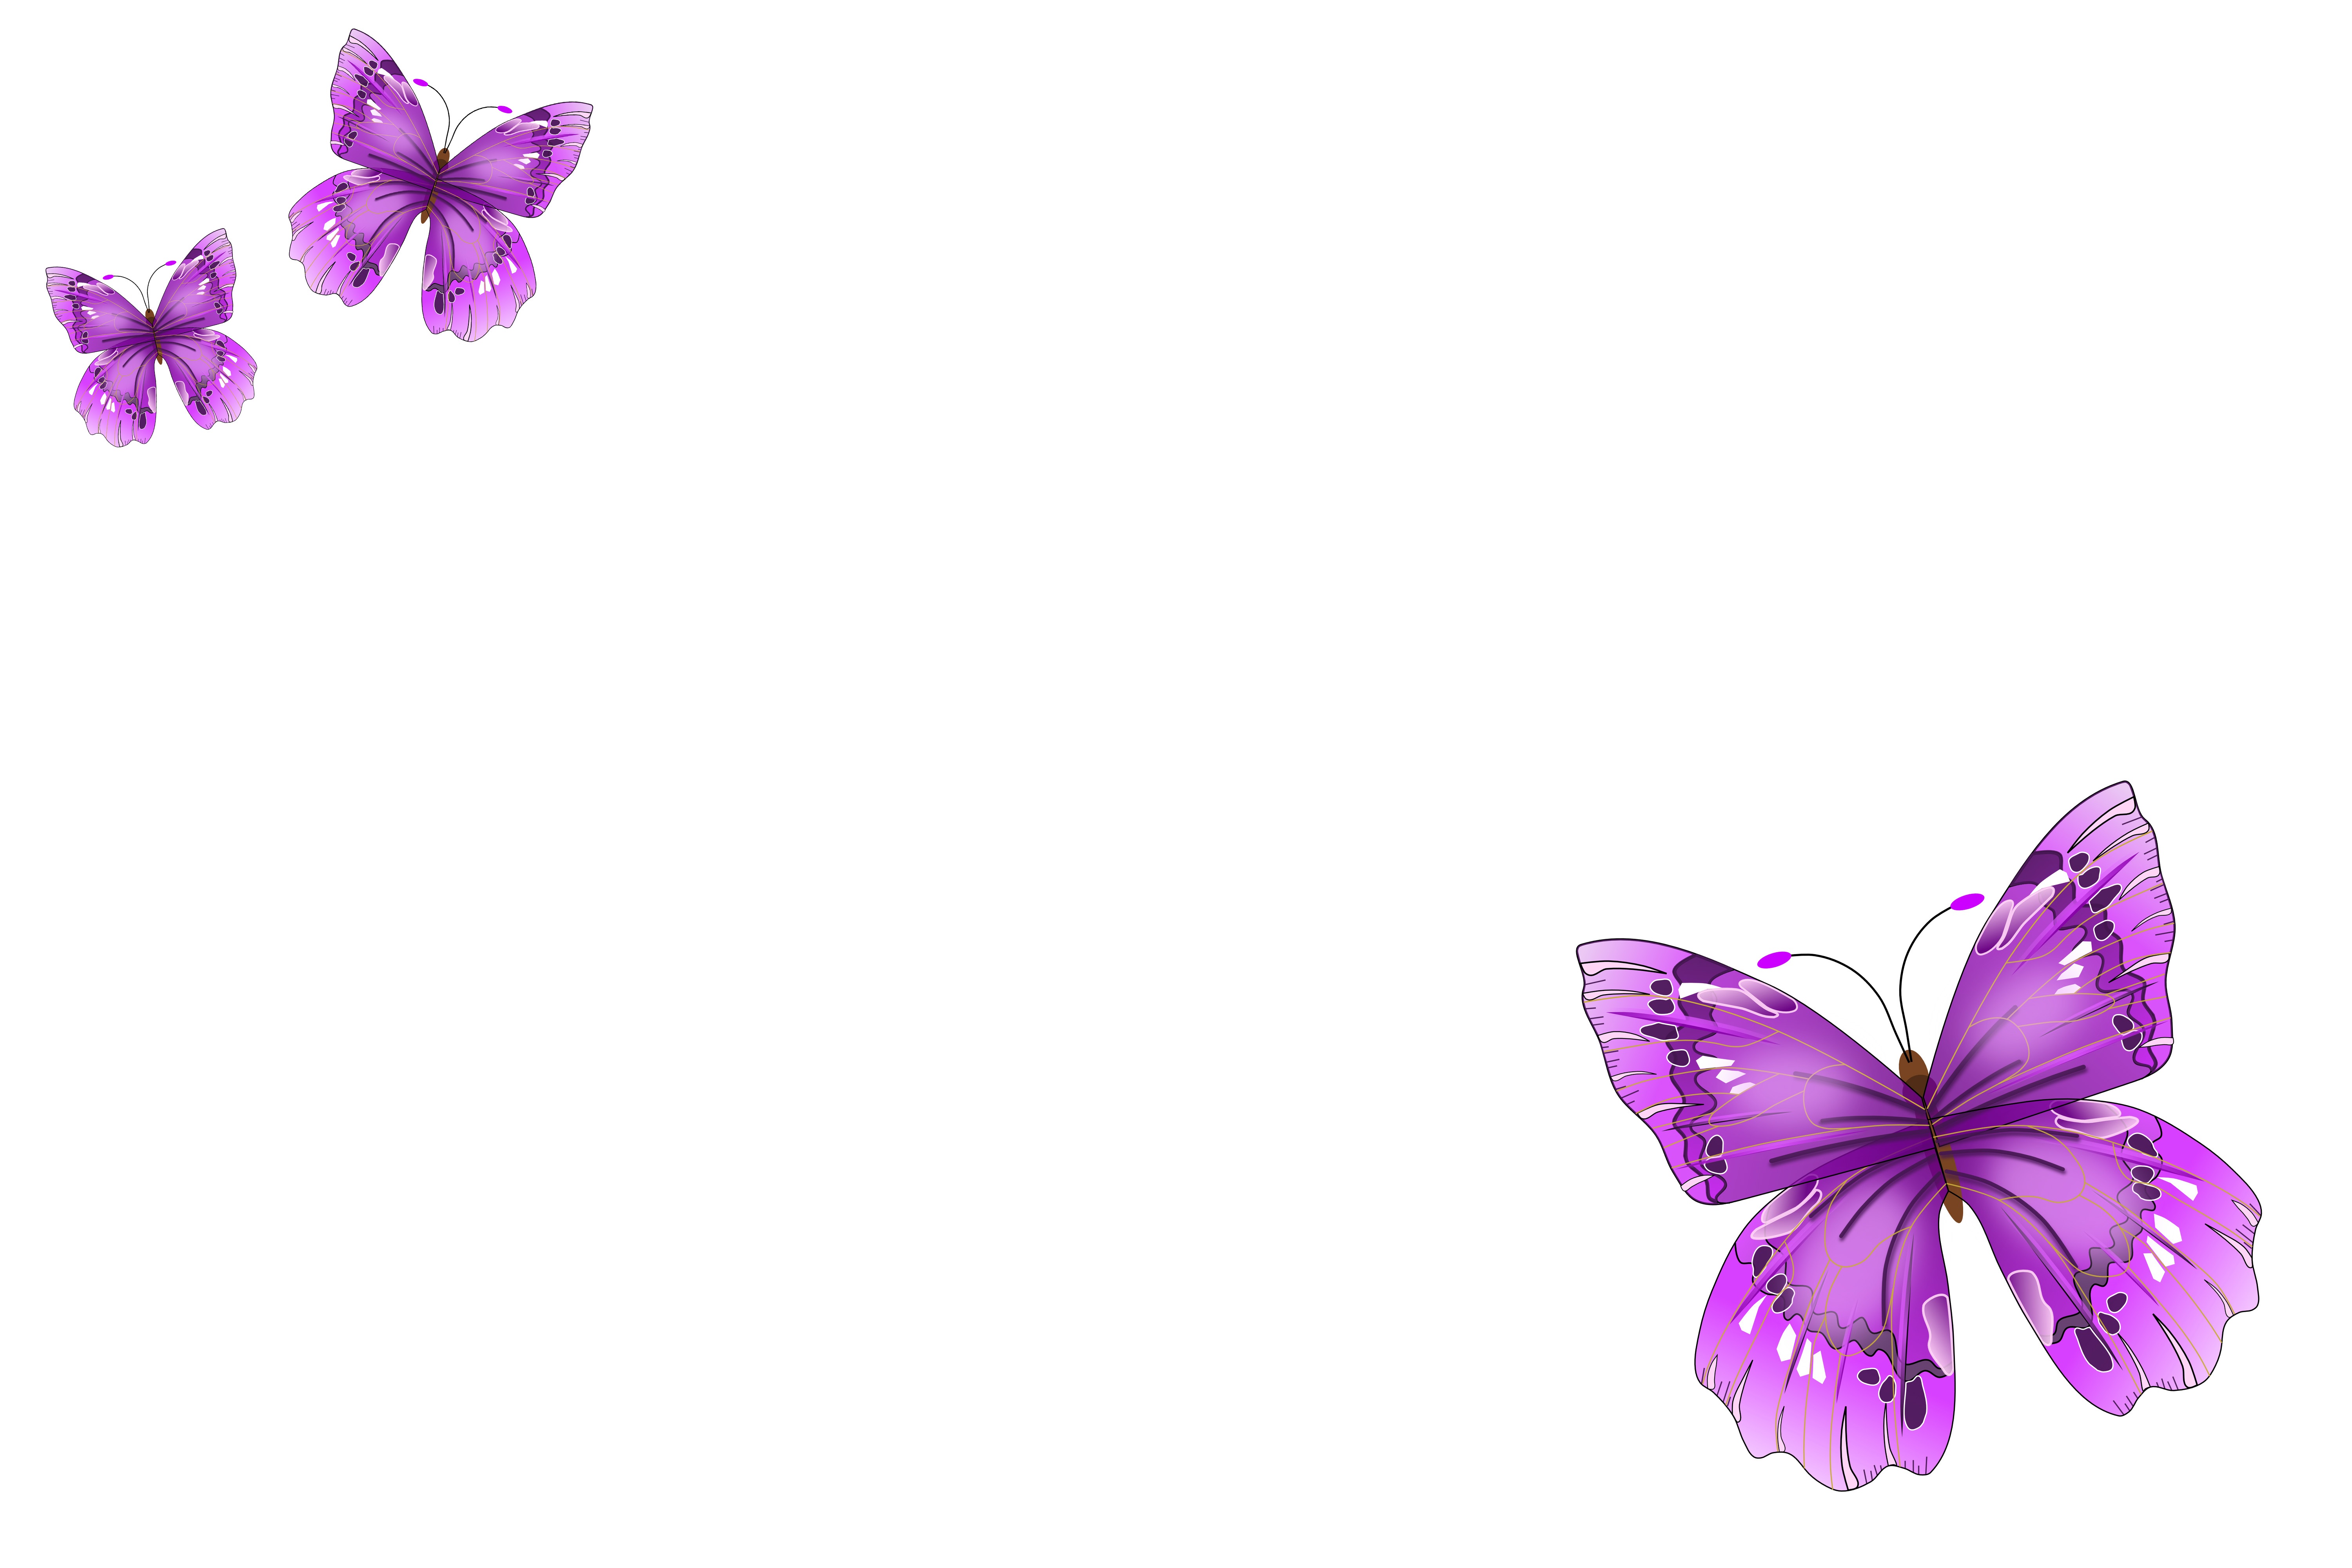 Фон красивый без фона. Фон бабочки. Бабочки на белом фоне. Фон для презентации бабочки. Бабочки цветочки на прозрачном фоне.